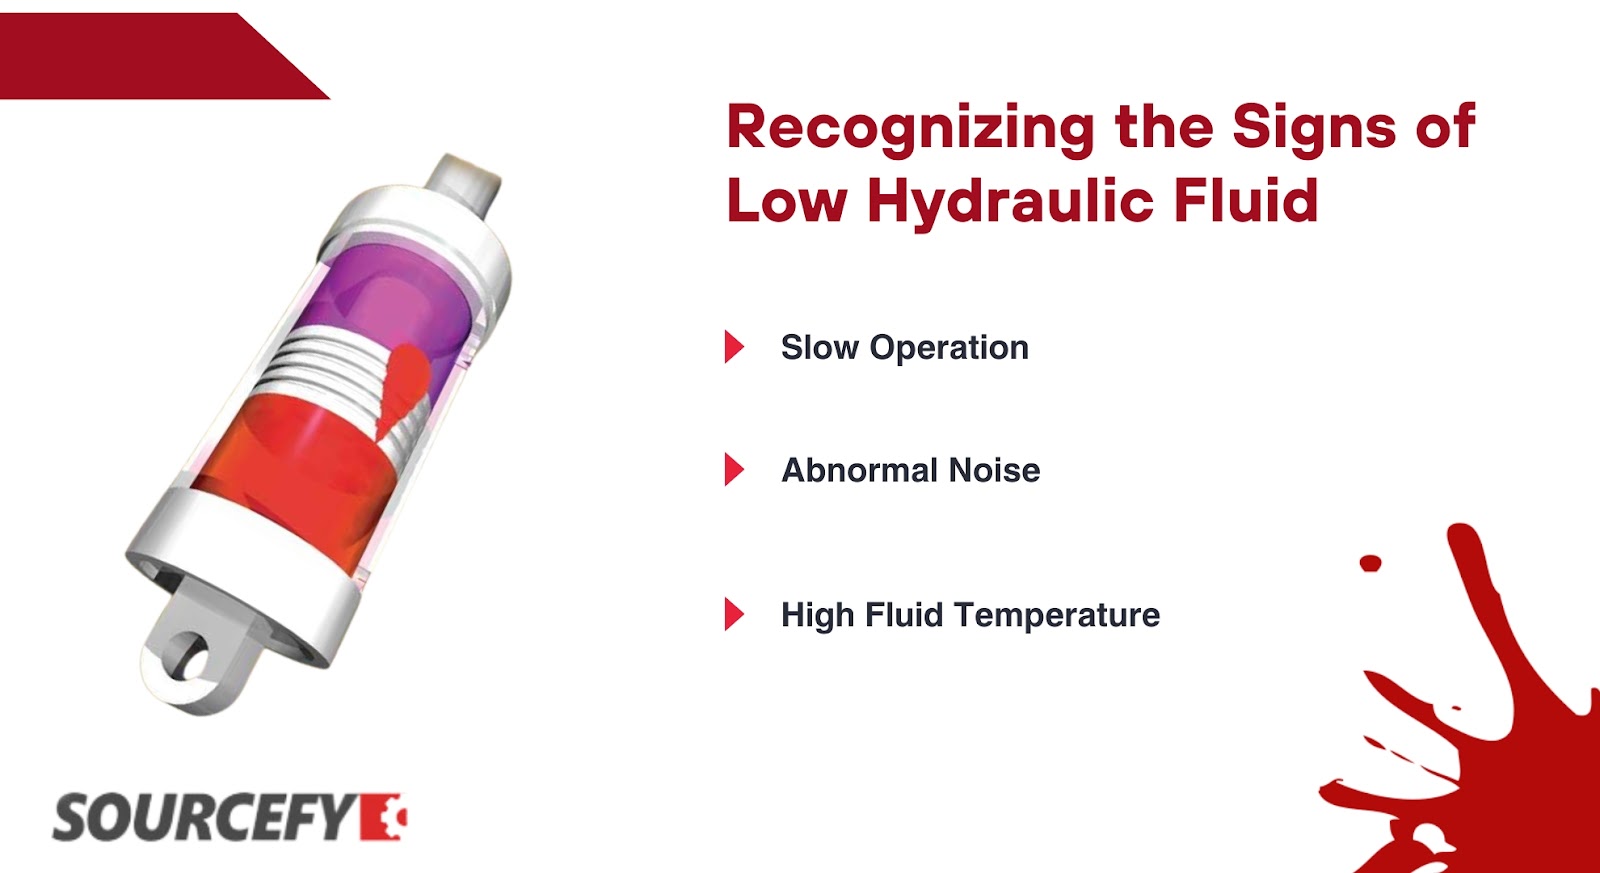 Signs of Low Hydraulic Fluid